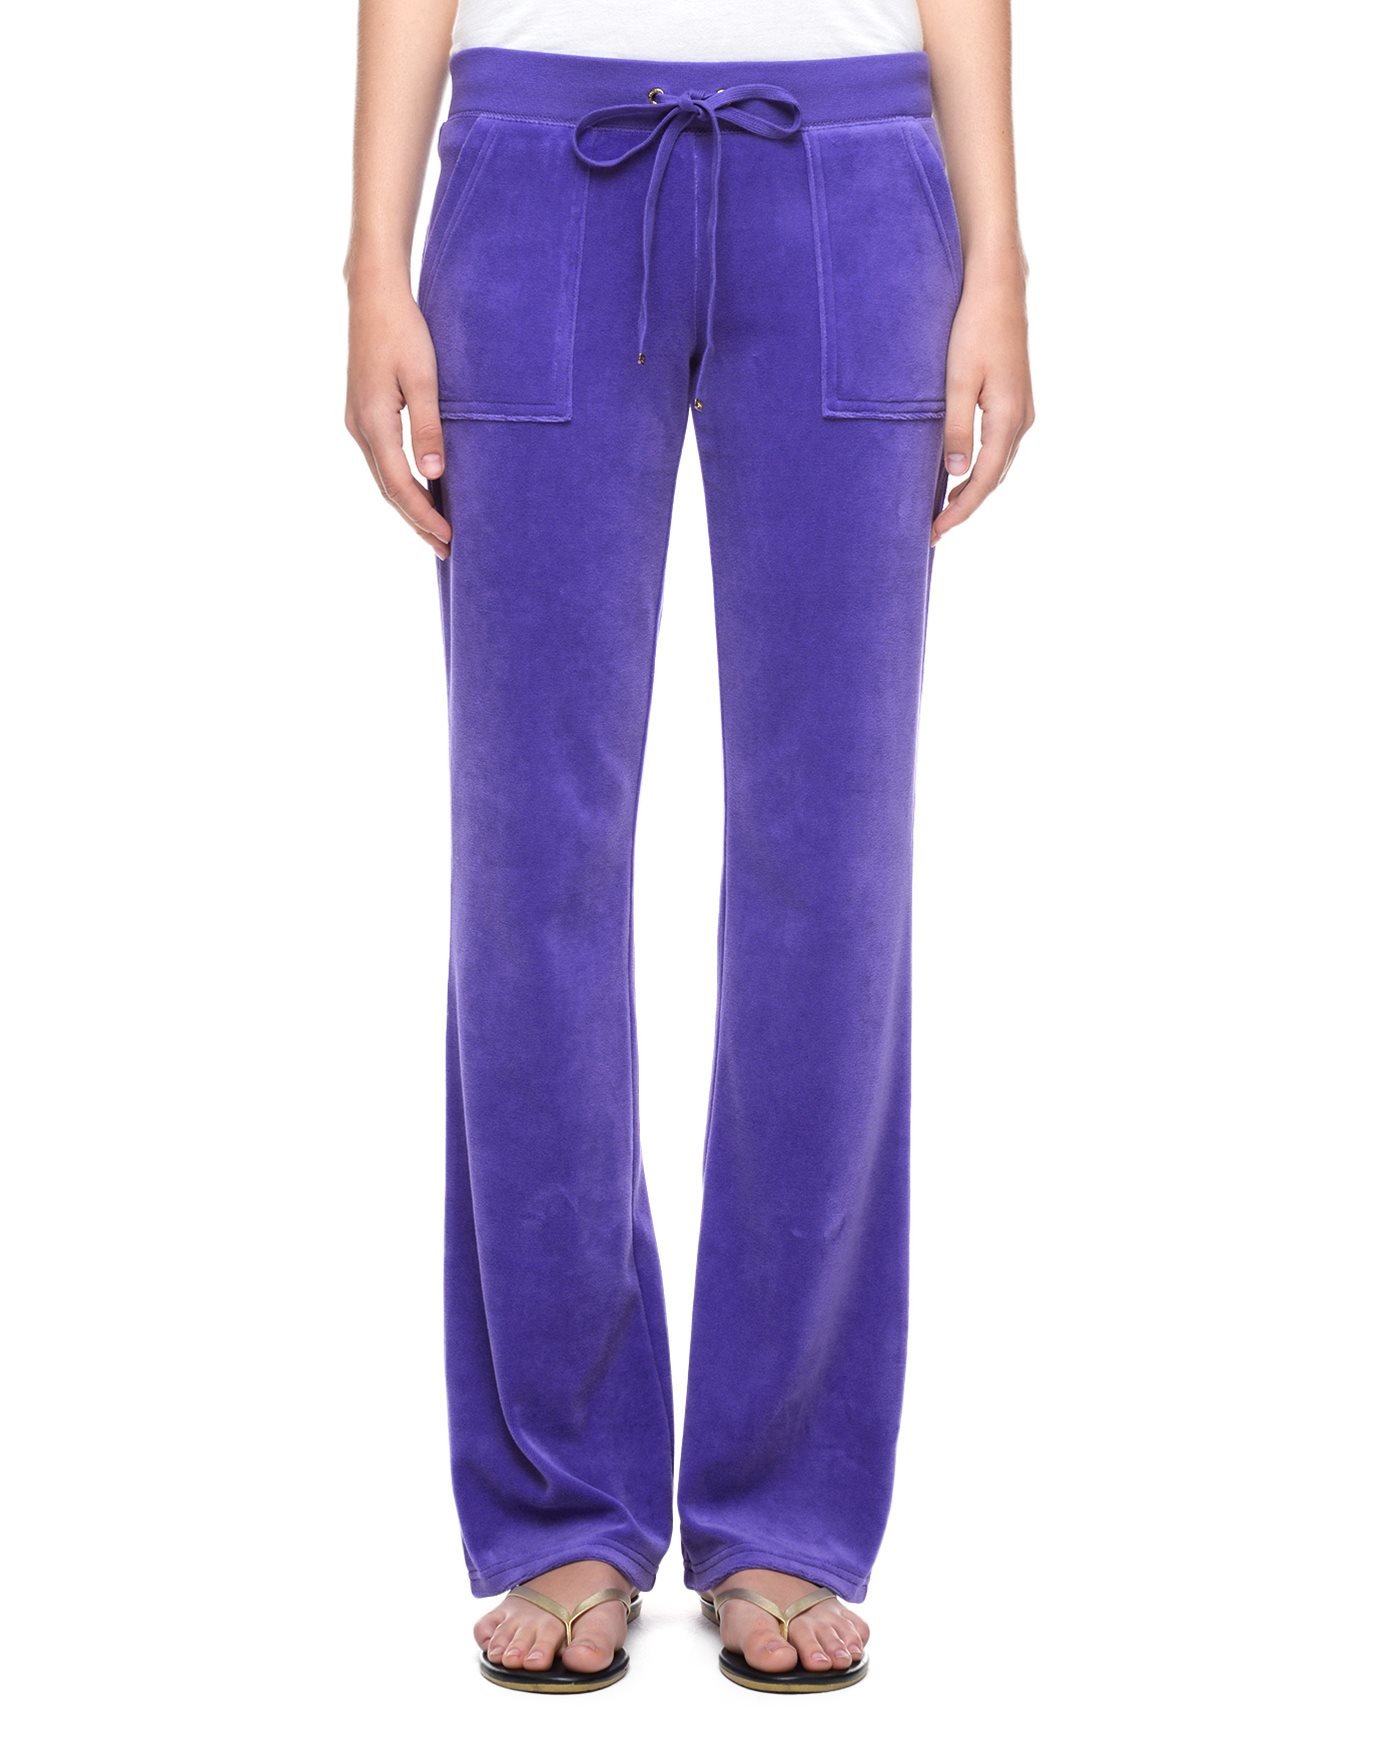 Juicy couture Bling Bootcut Velour Pant in Purple (PURPLE VELVET) | Lyst